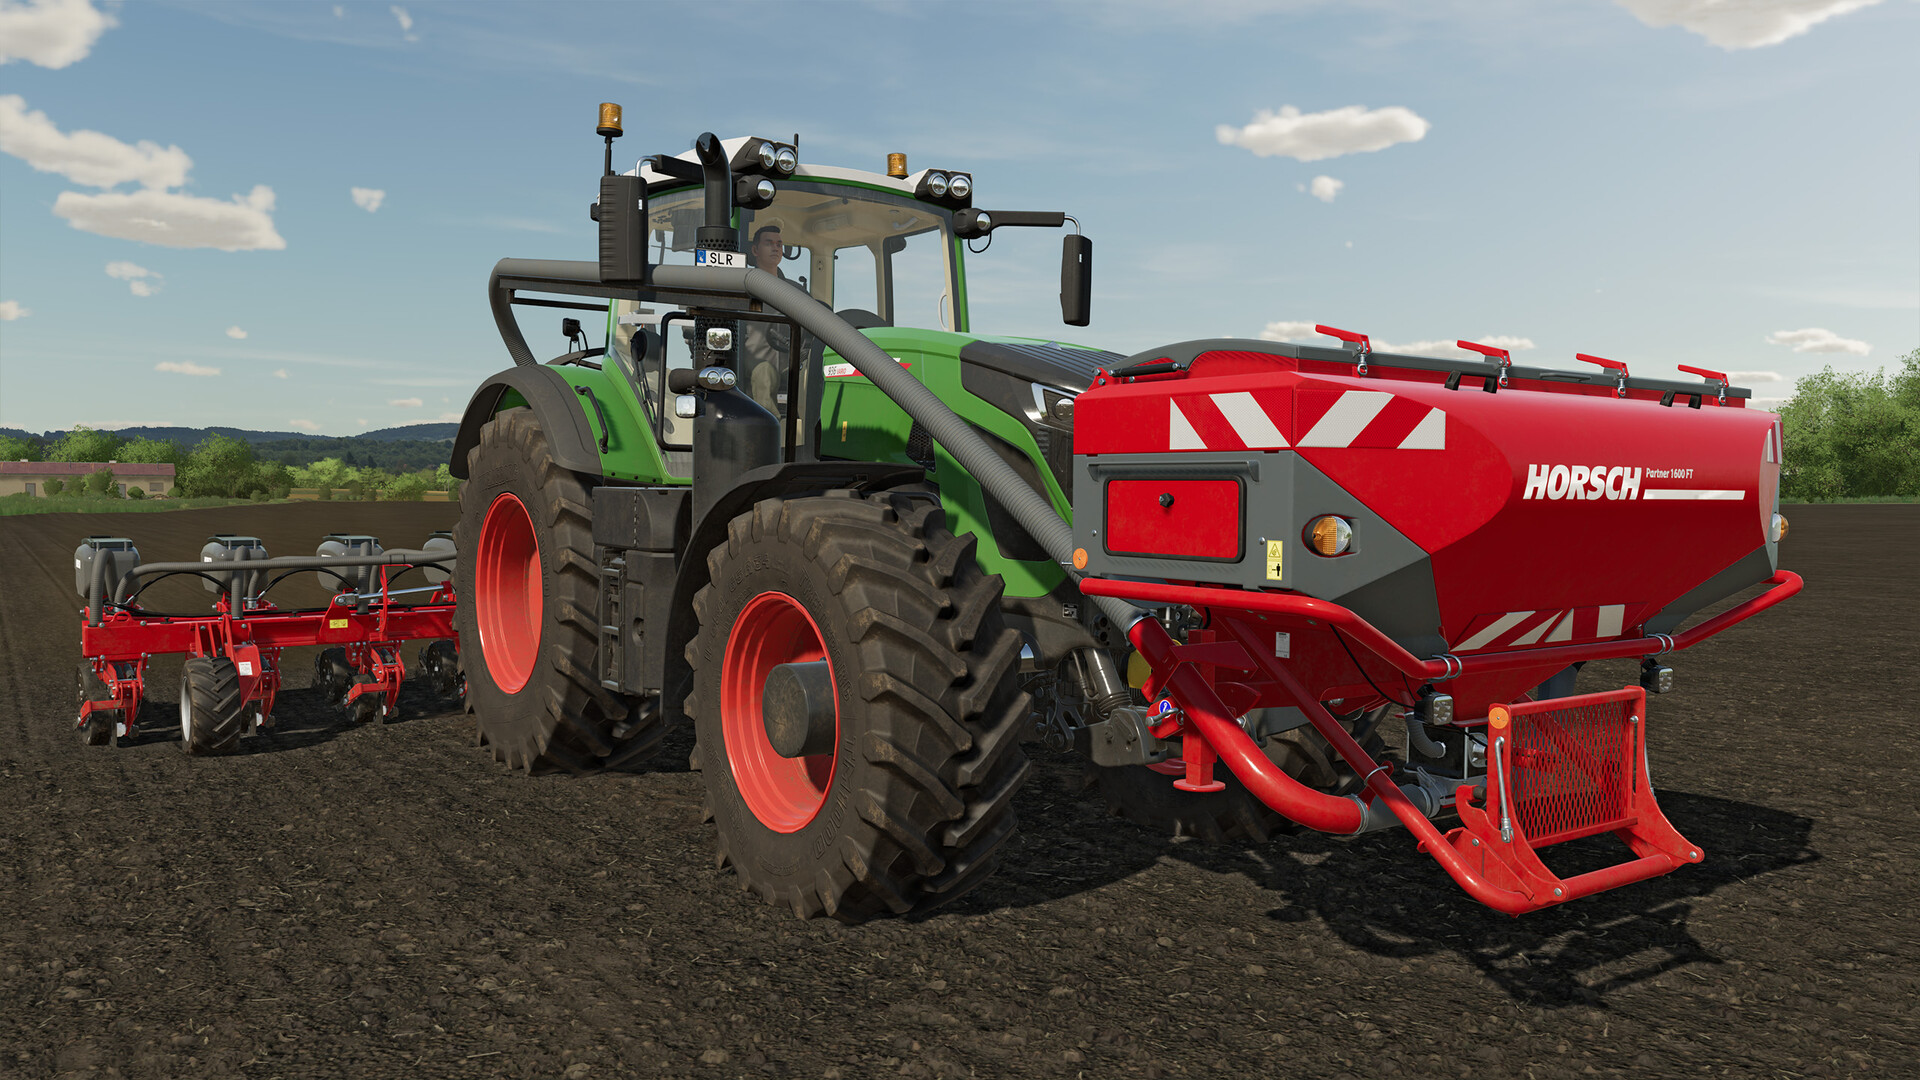 Farming Simulator 22 - HORSCH AgroVation Pack DLC Steam CD Key